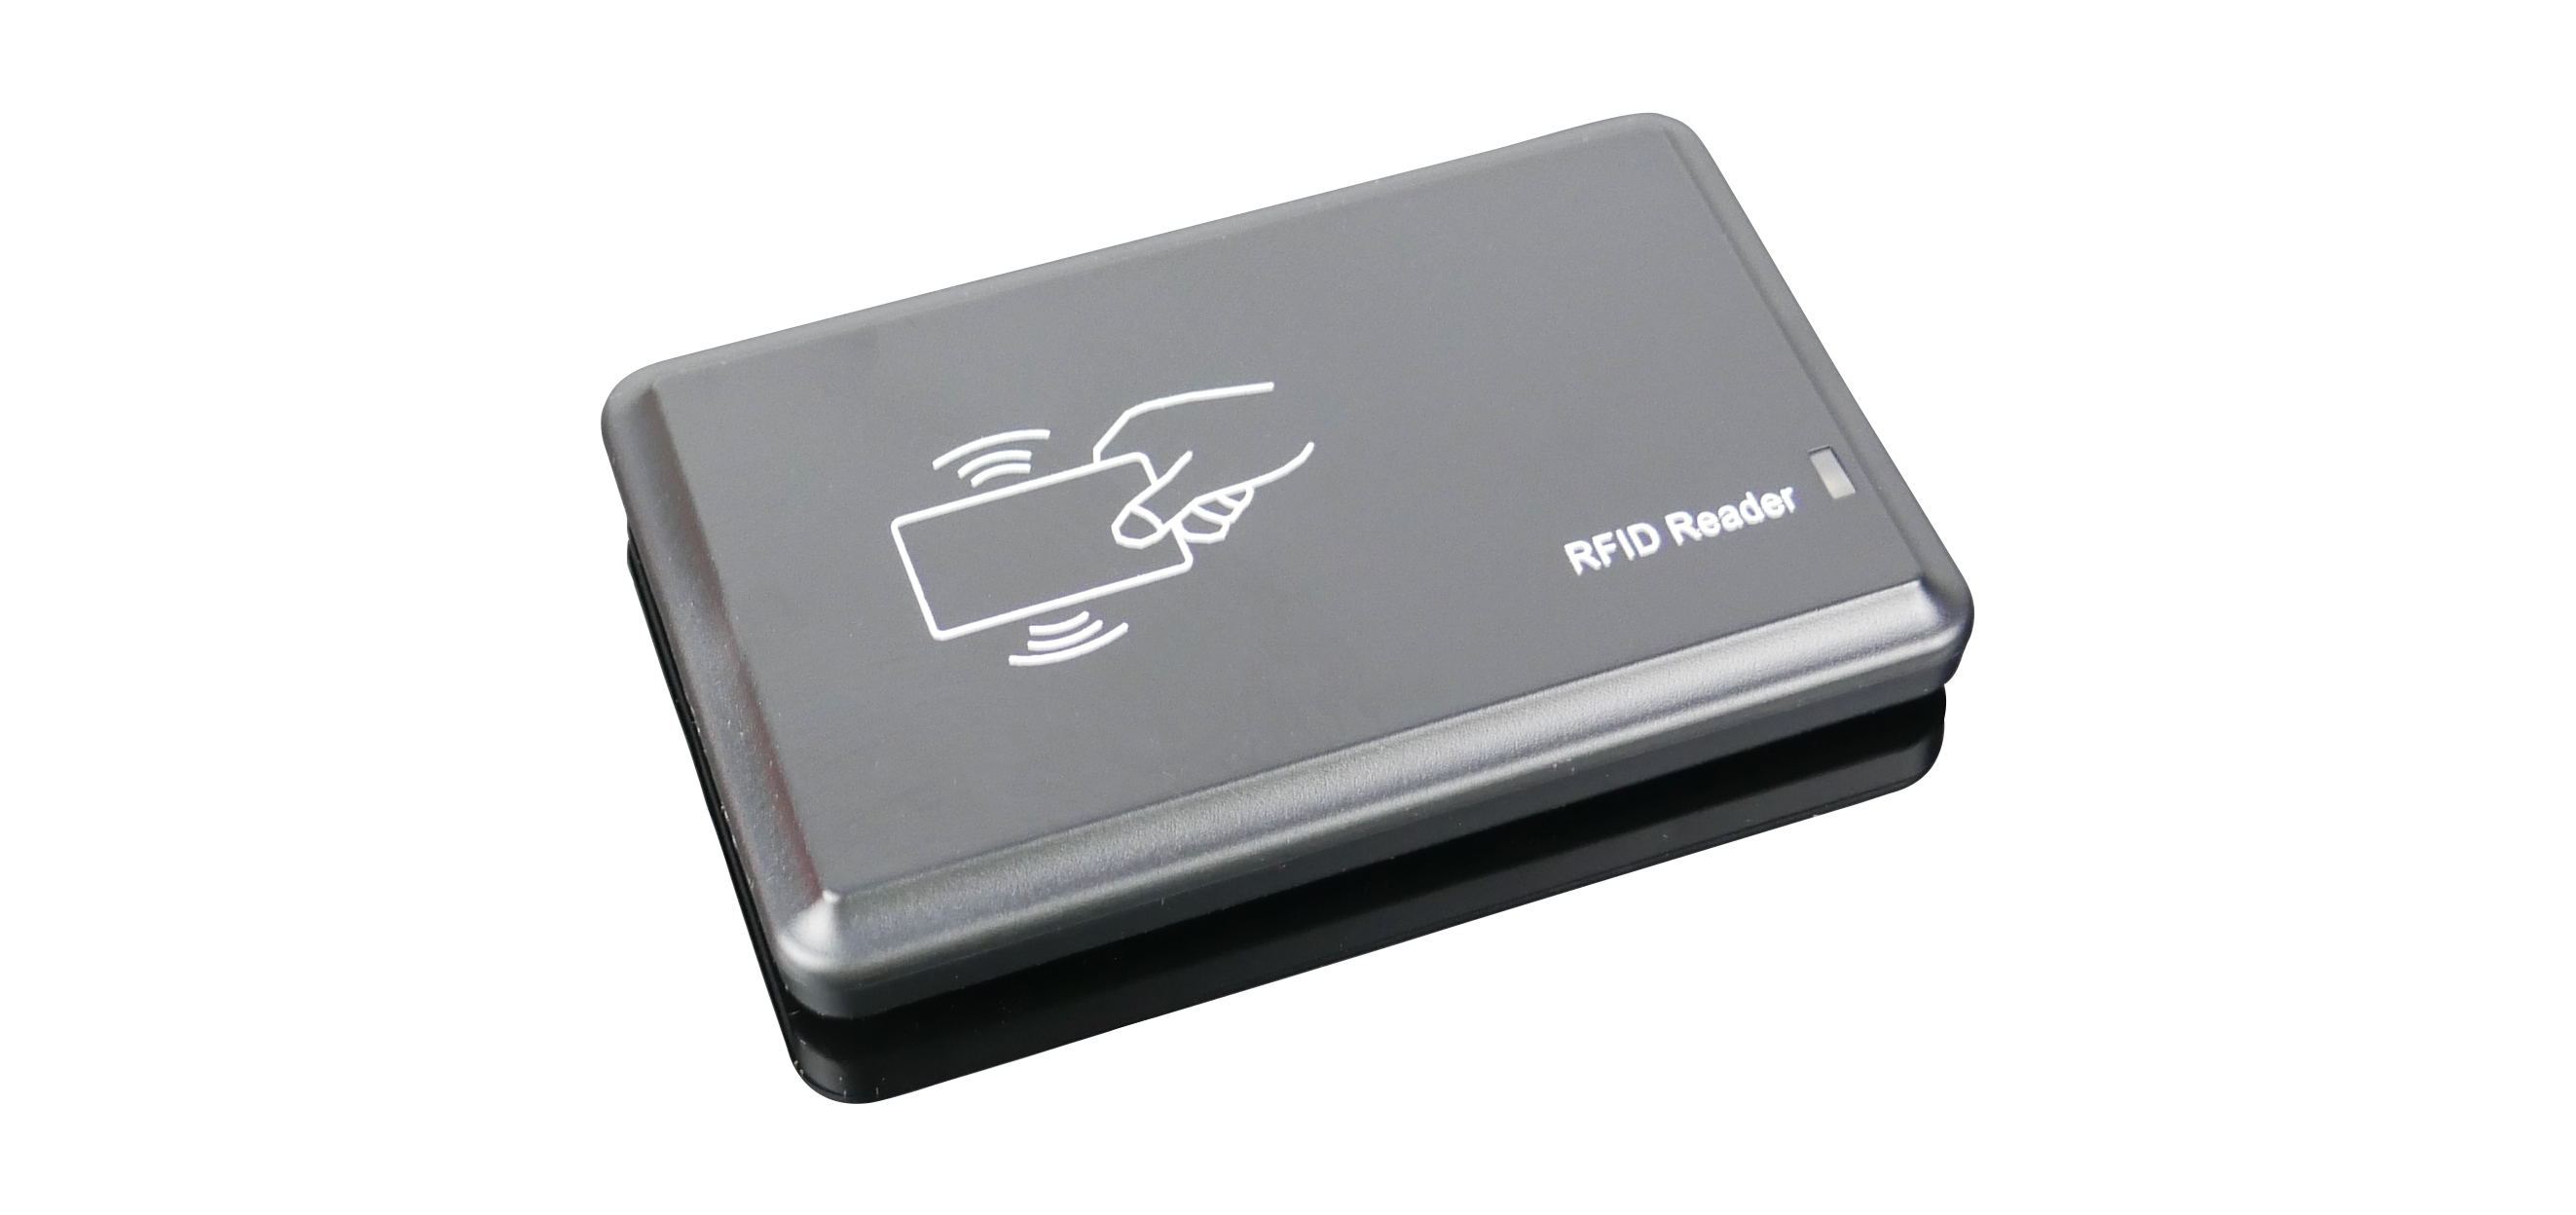 Dispositivo de lectura de etiquetas RFID HD-RD20X con cable